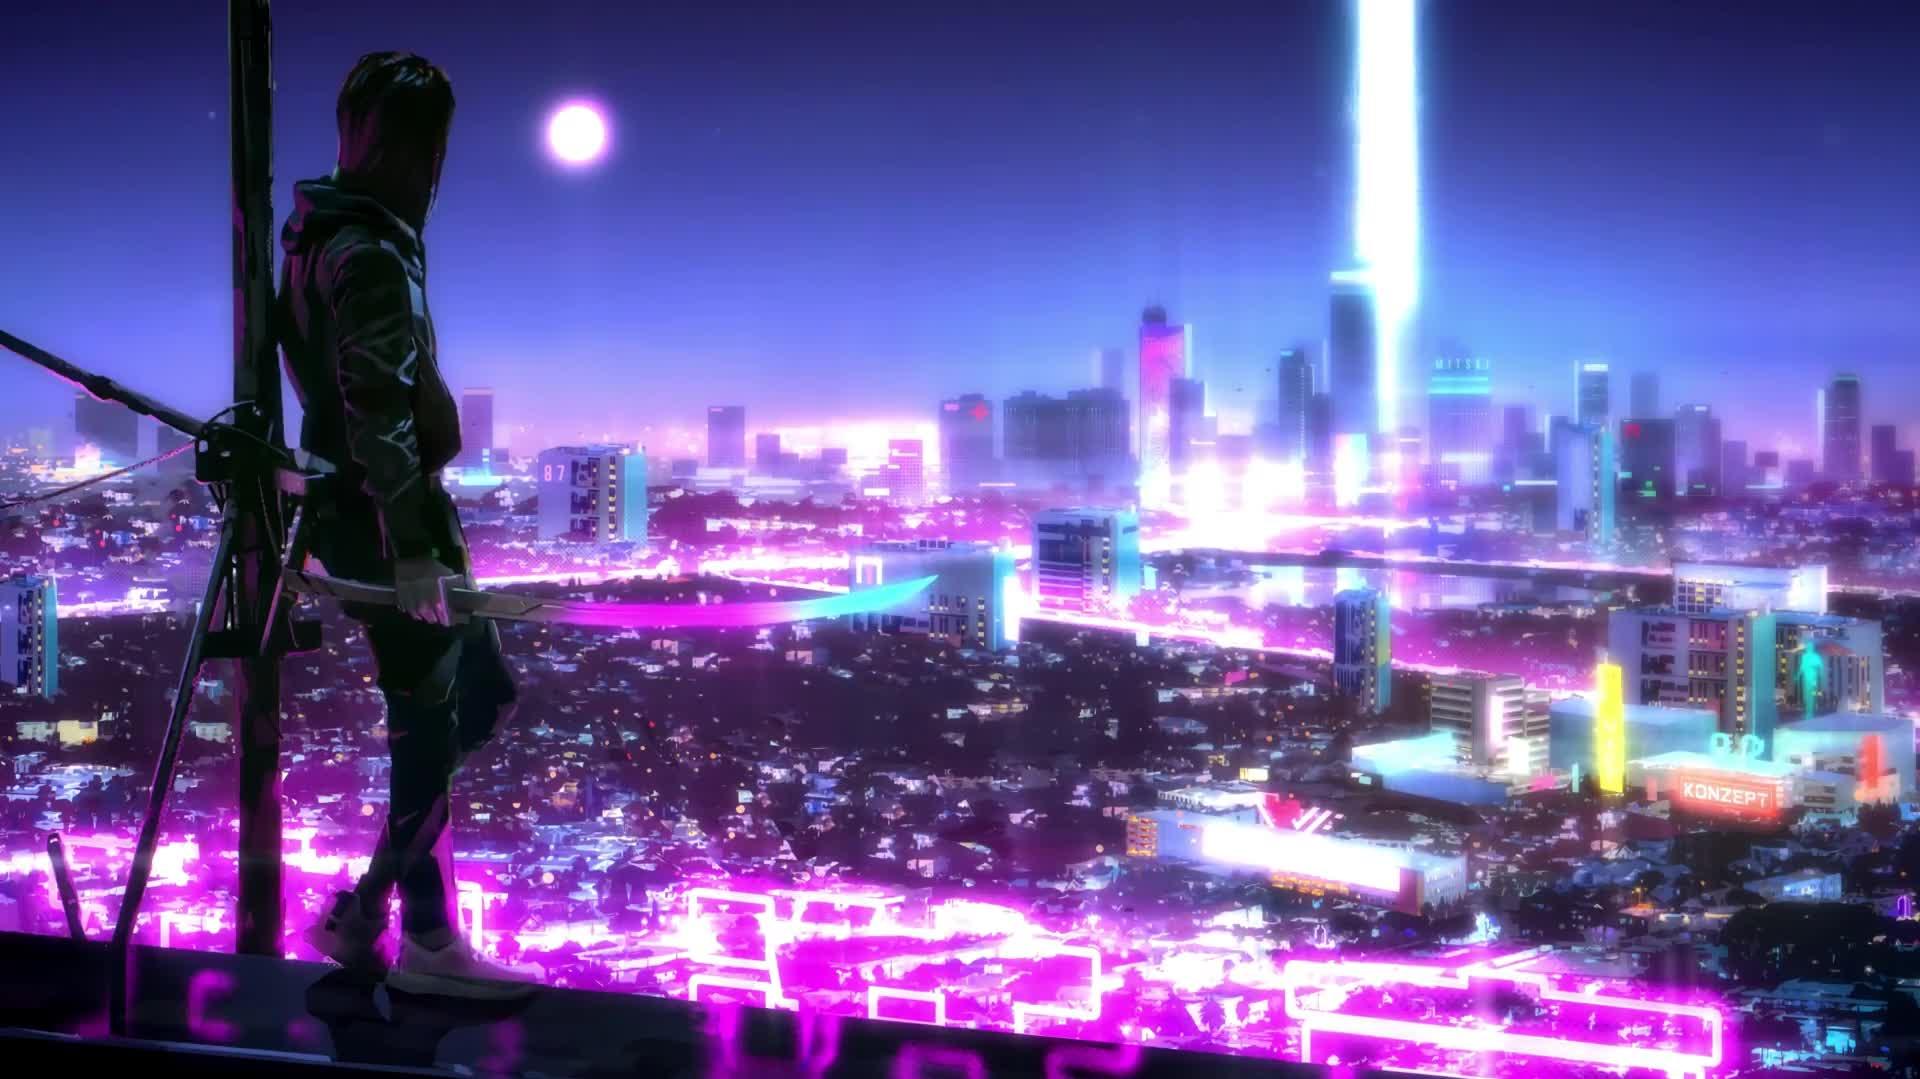 Neon Samurai with Katana Night City Cyberpunk   Live Desktop